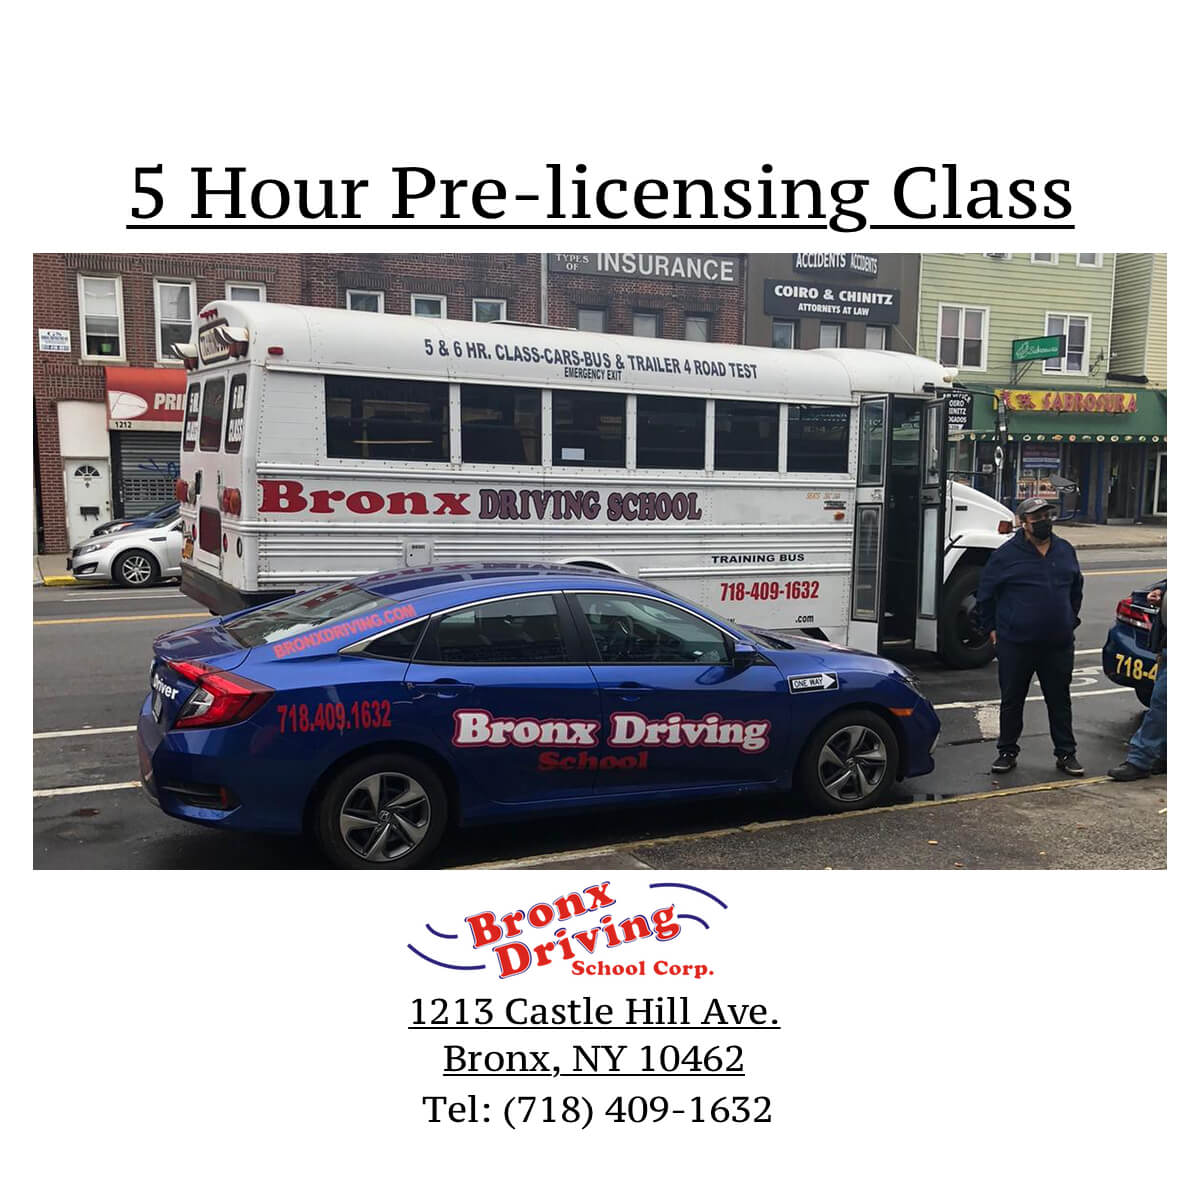 5 Hour Pre-Licensing Class - Bronx Driving School